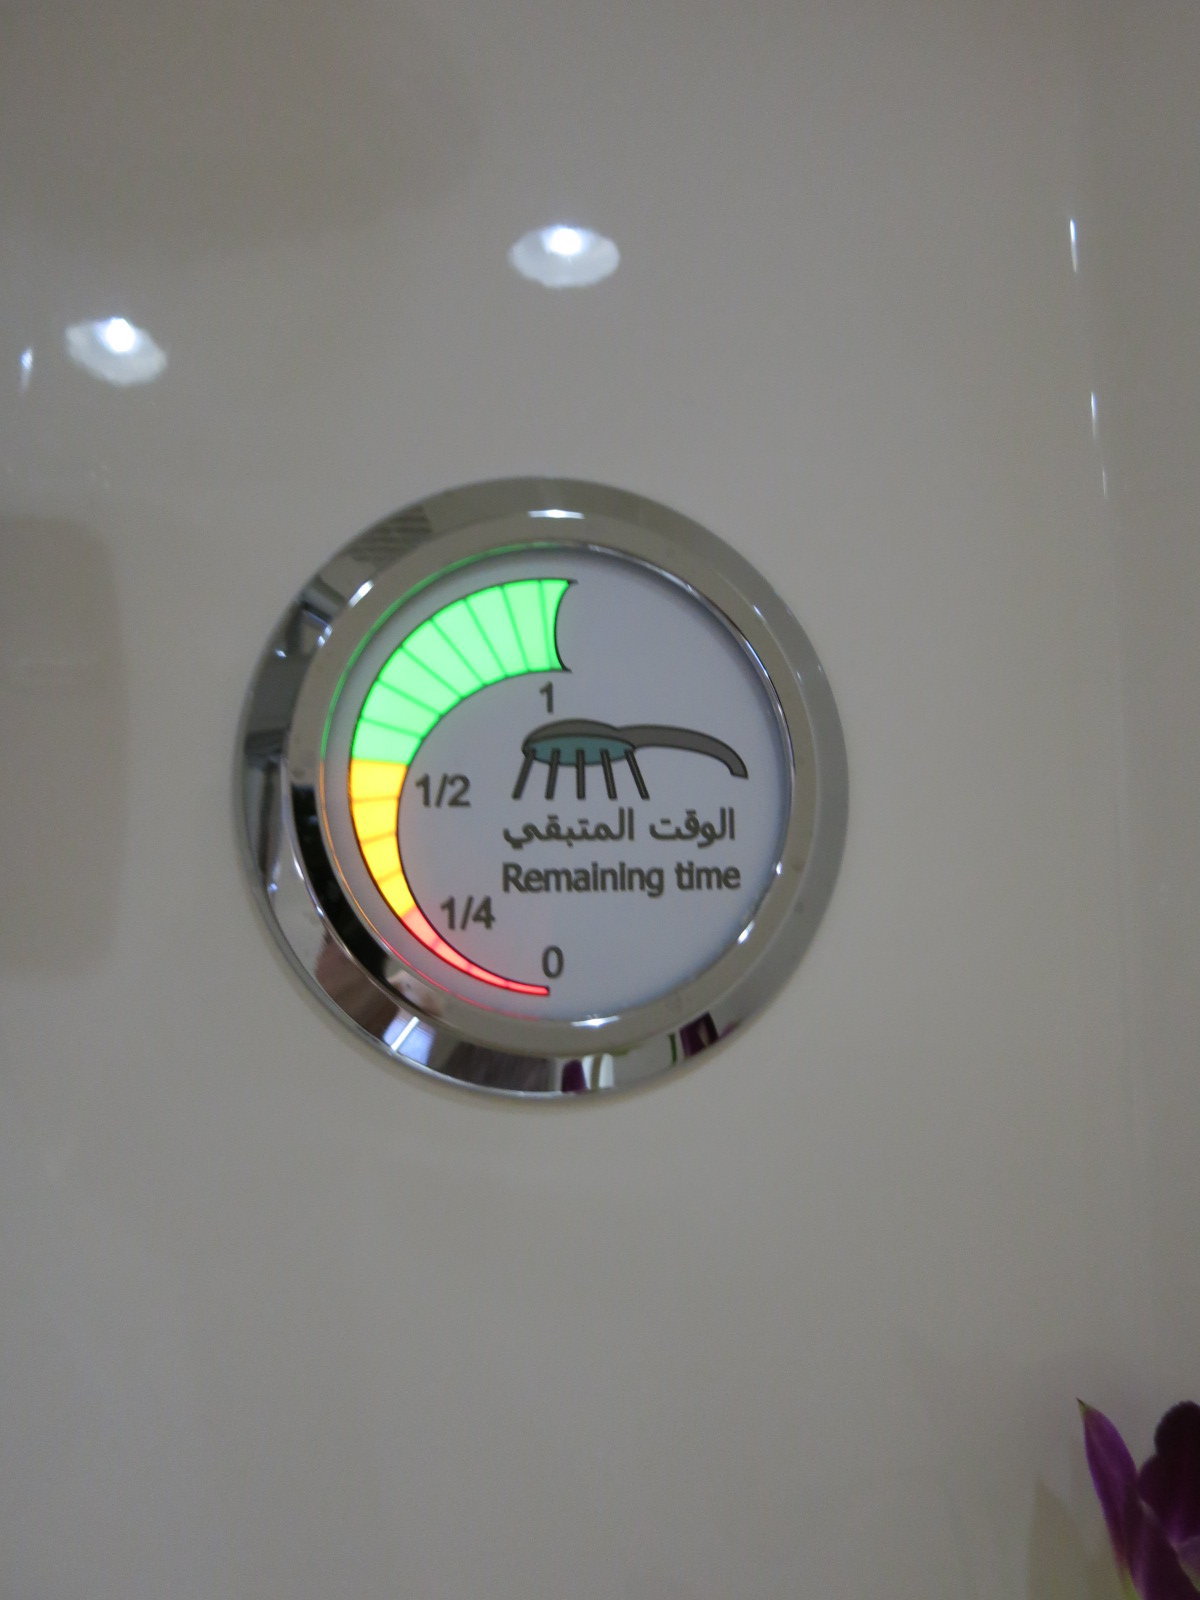 Emirates first class a380 Dubai Bangkok bathroom shower timer